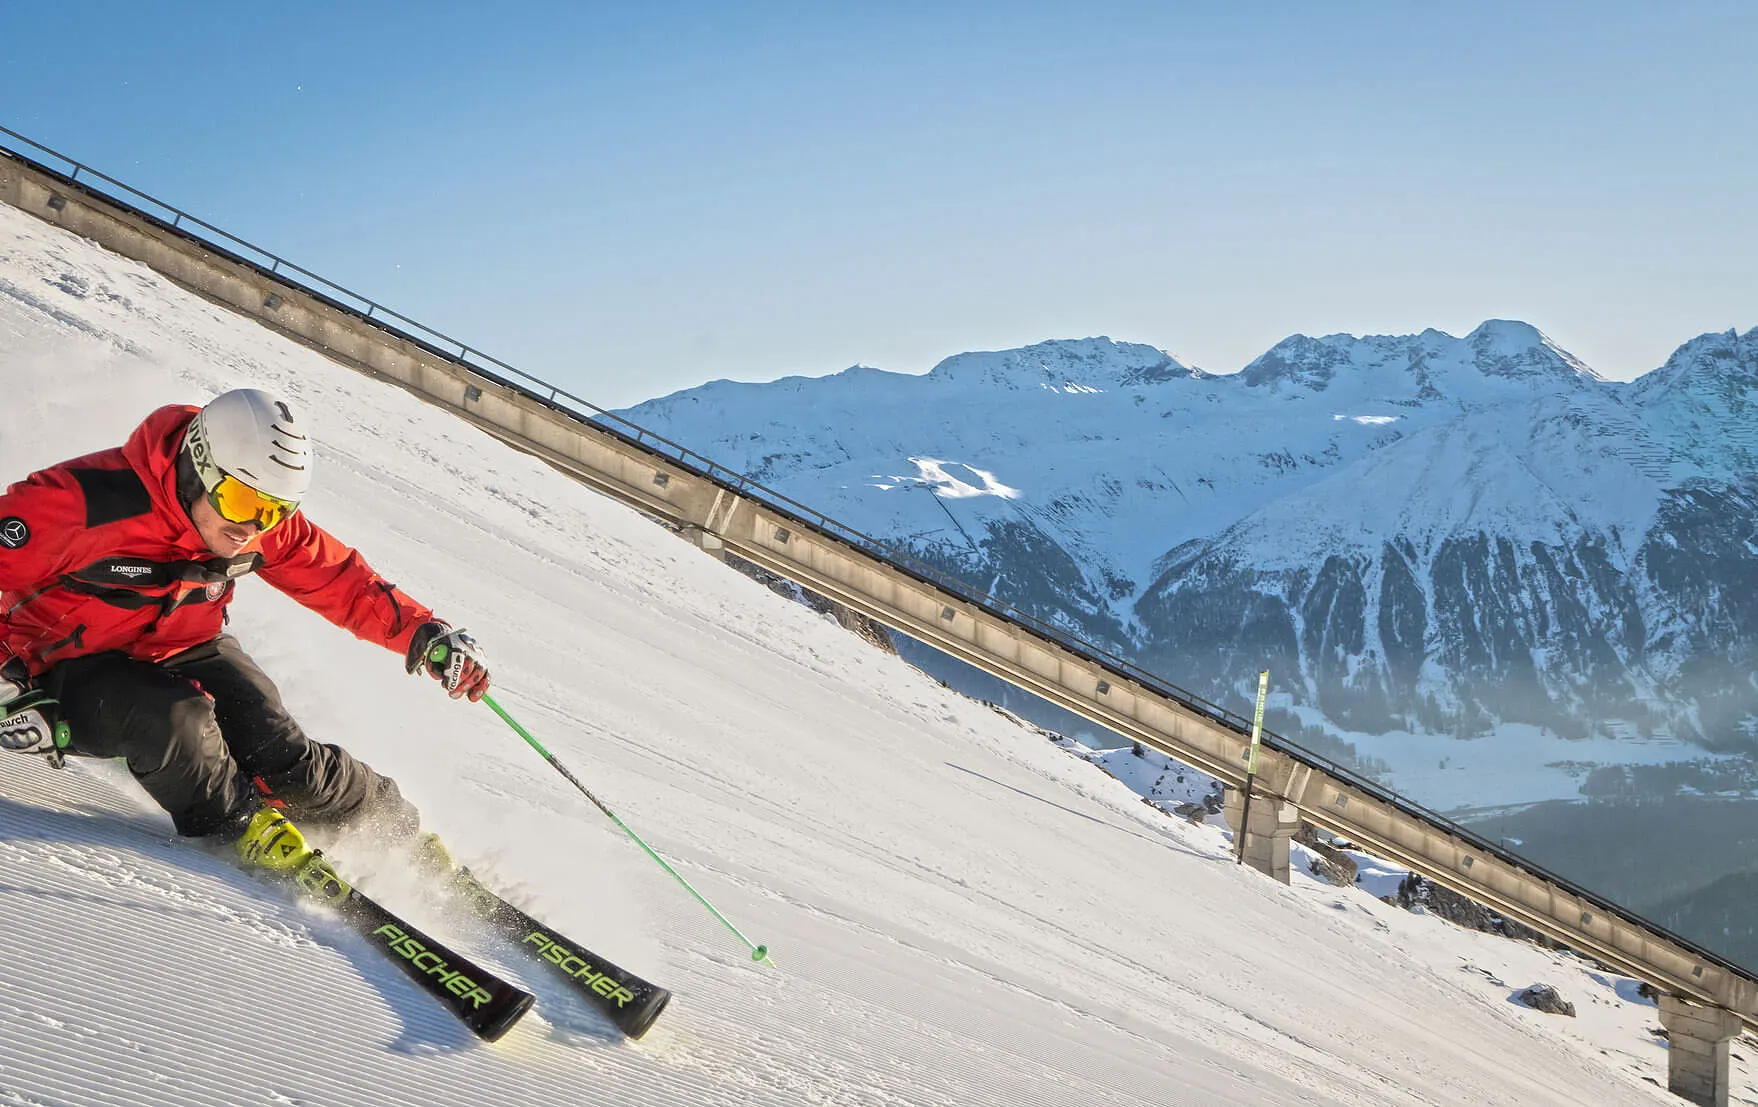 The Red Legends ski instructor skiing Muntanella black run at St Moritz Switzerland